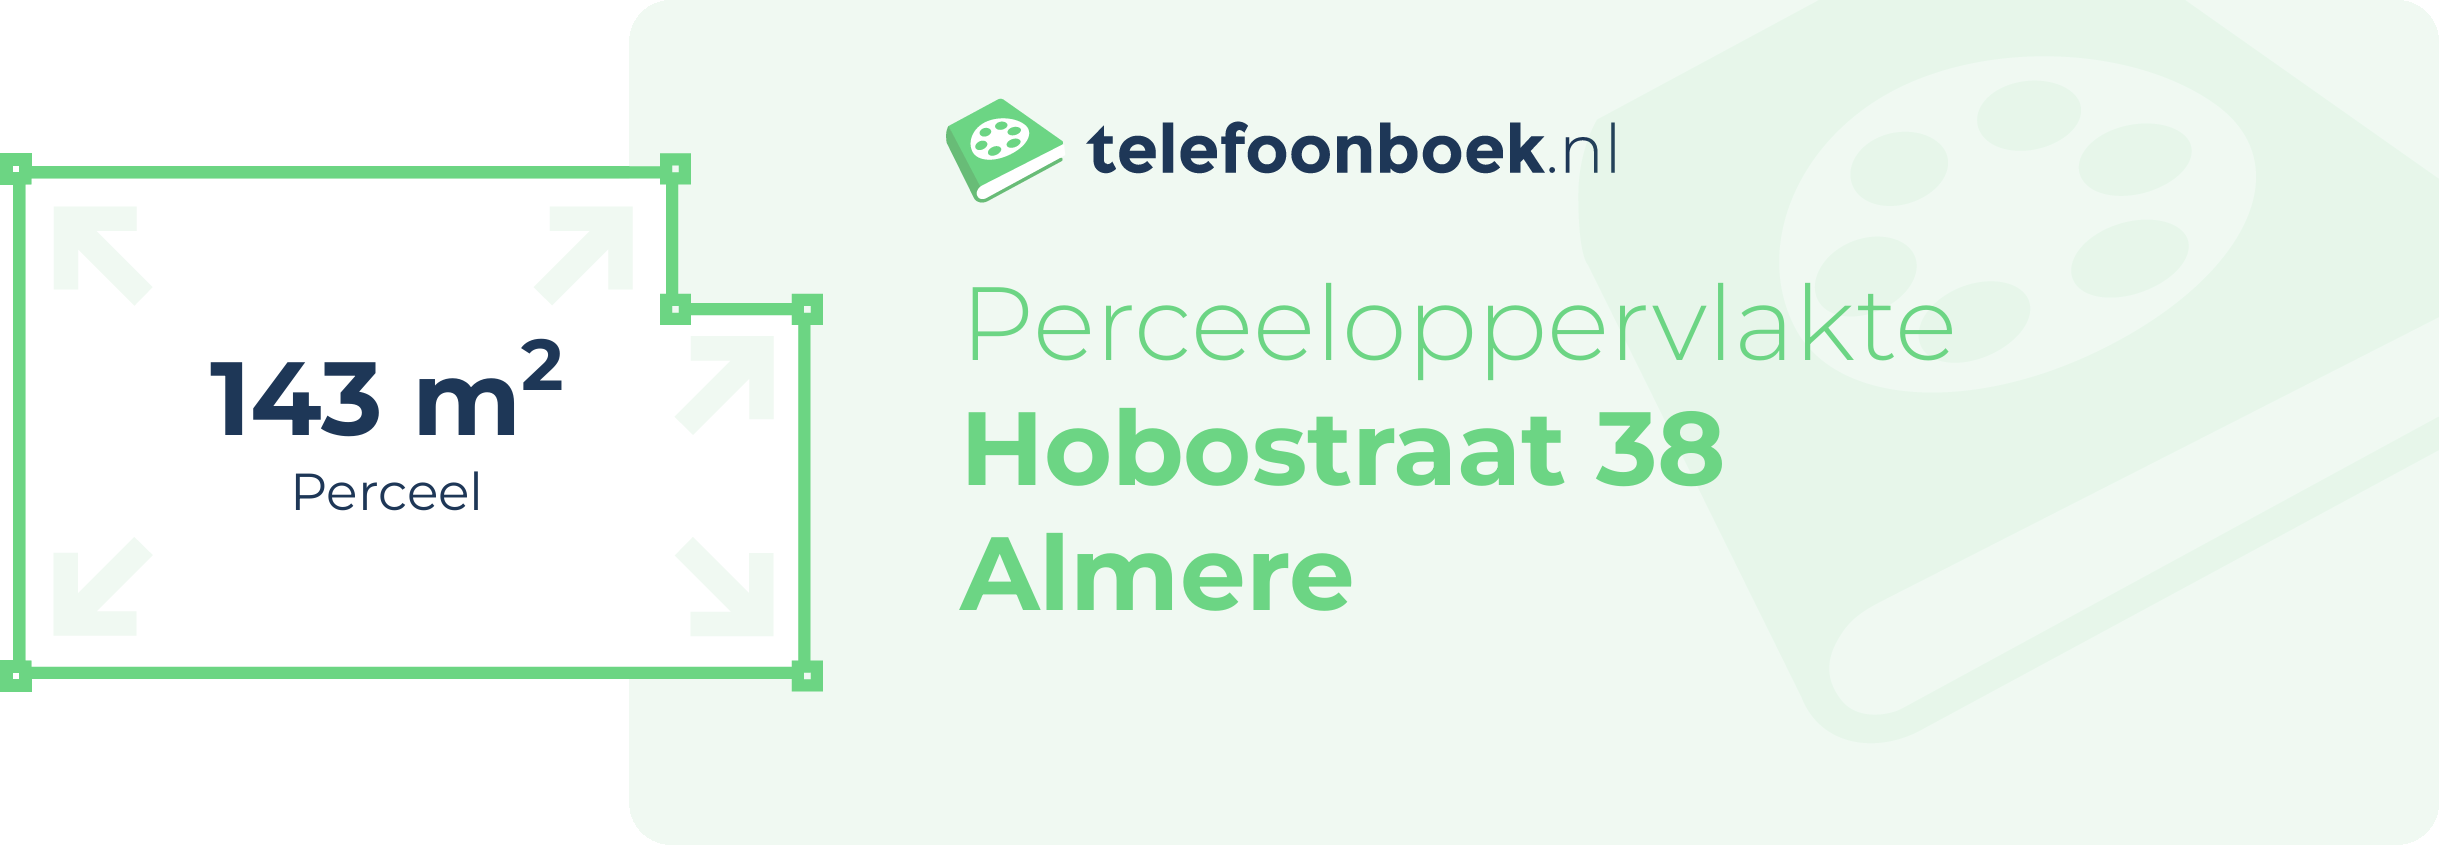 Perceeloppervlakte Hobostraat 38 Almere